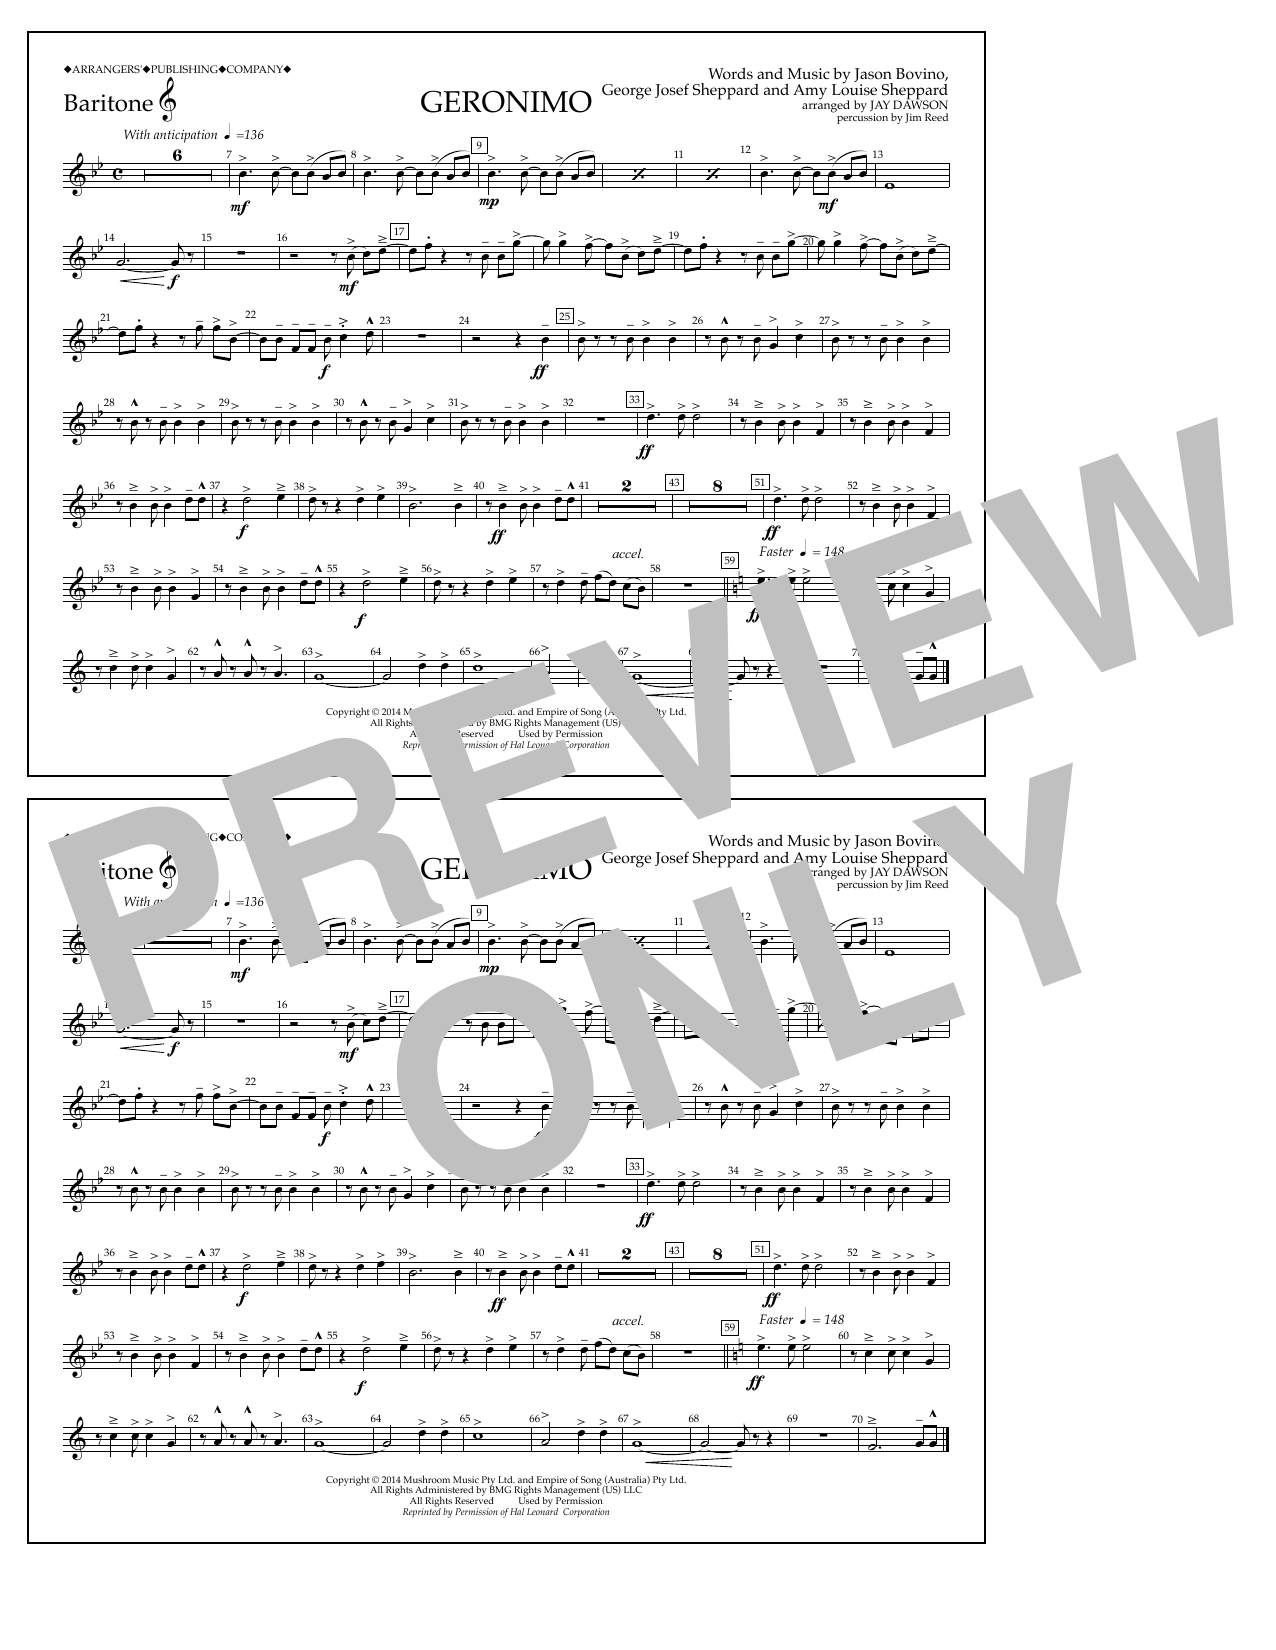 Jay Dawson Geronimo - Baritone T.C. Sheet Music Notes & Chords for Marching Band - Download or Print PDF